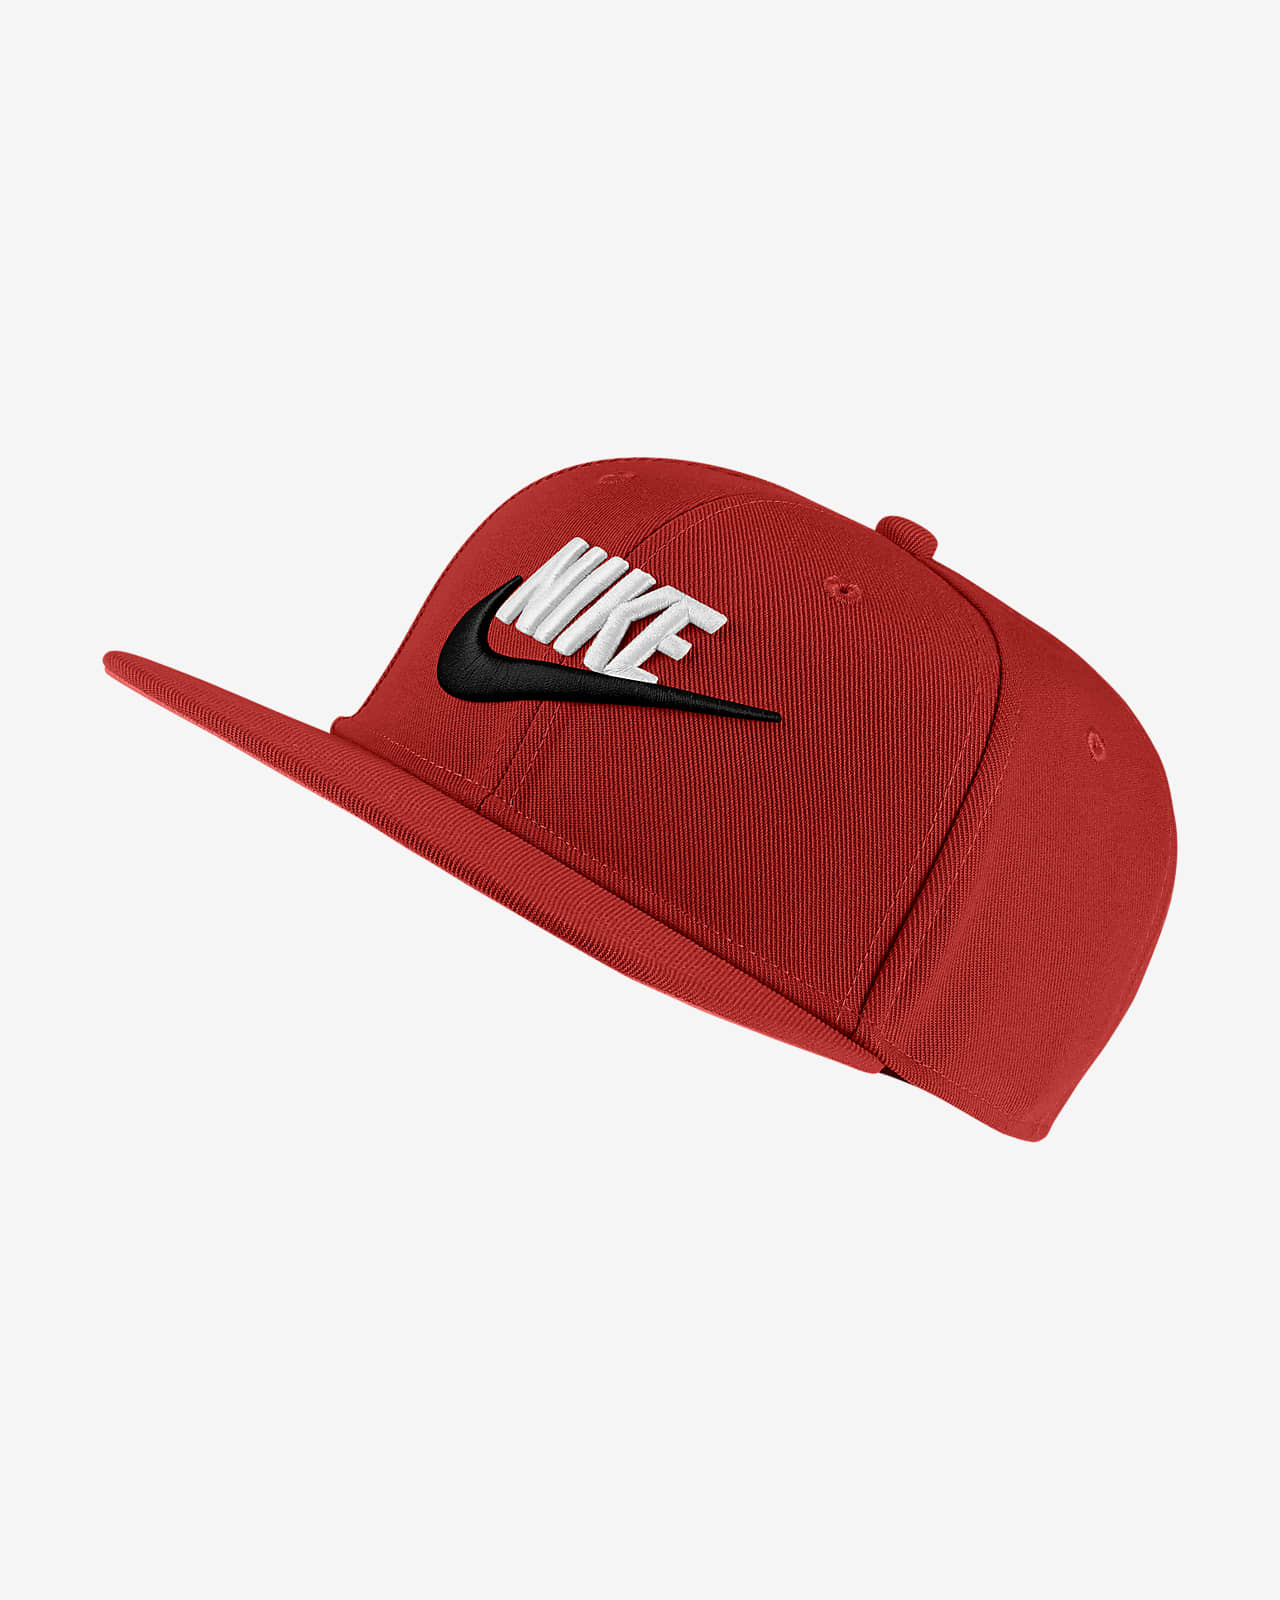 Nike Pro Kids' Adjustable Hat